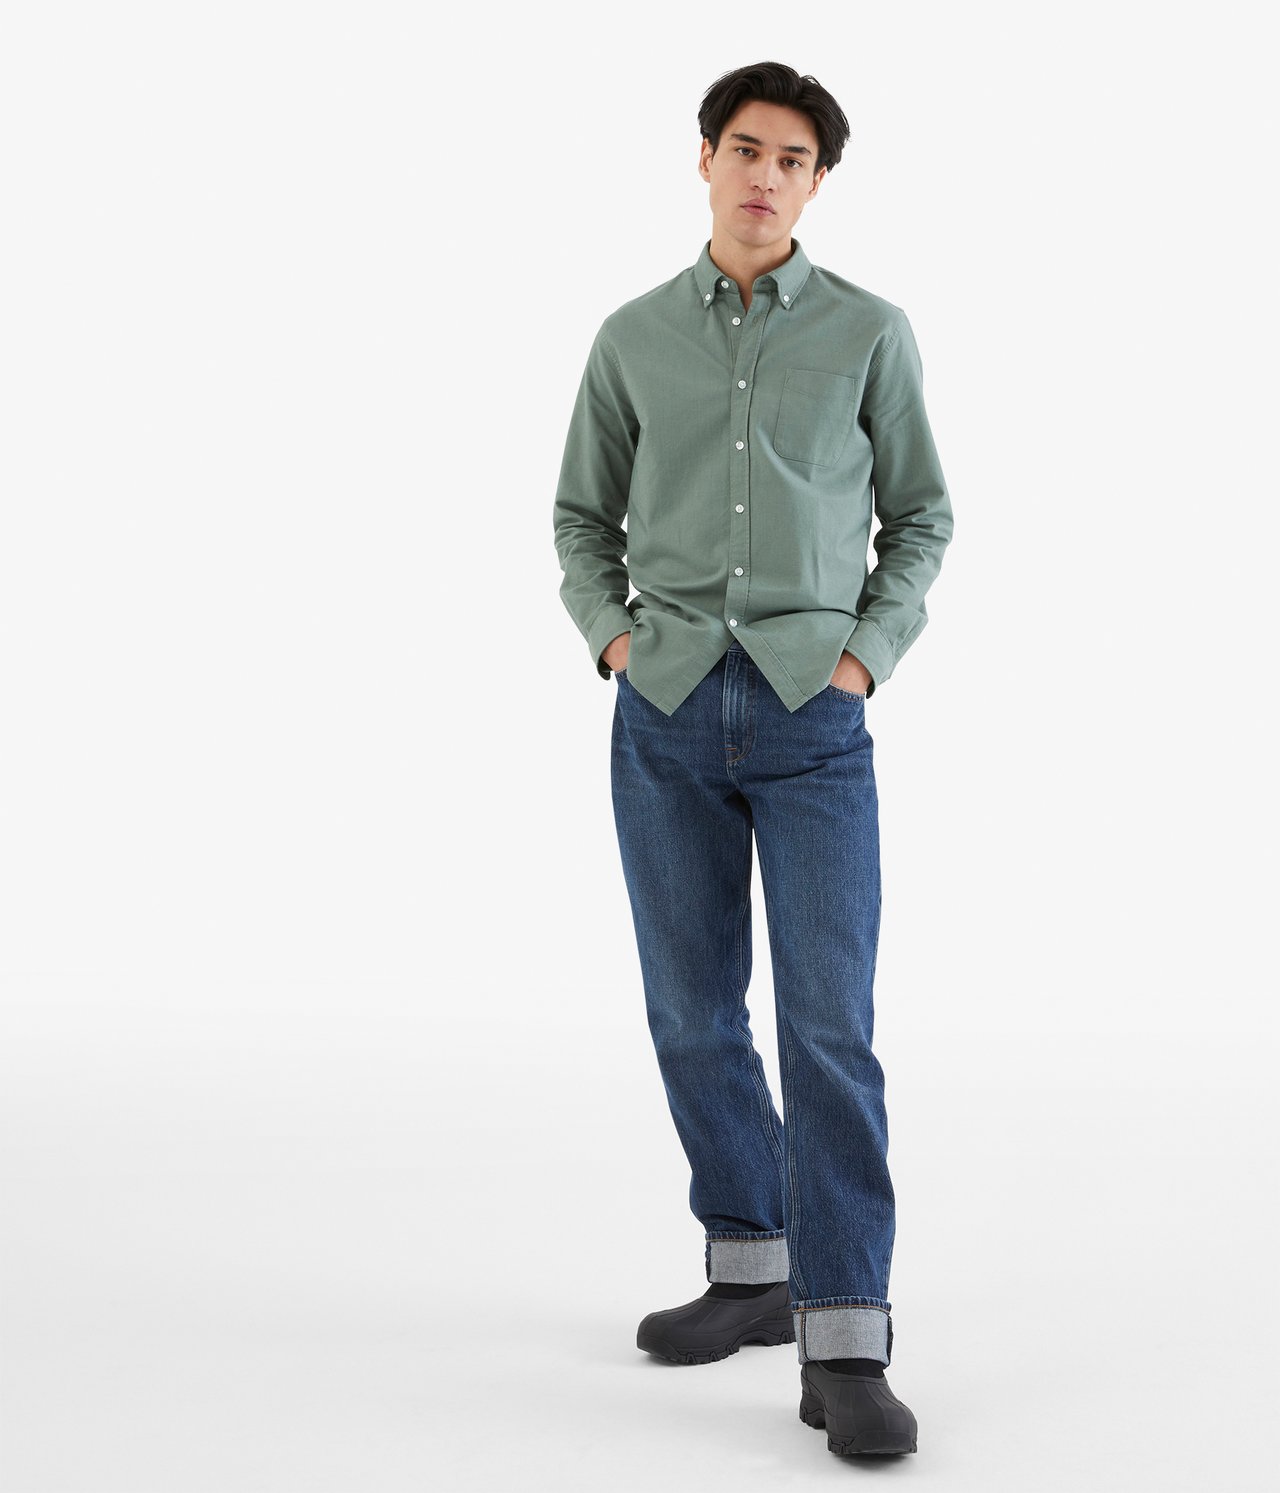 Oxfordskjorte regular fit - Grønn - 189cm / Storlek: M - 2